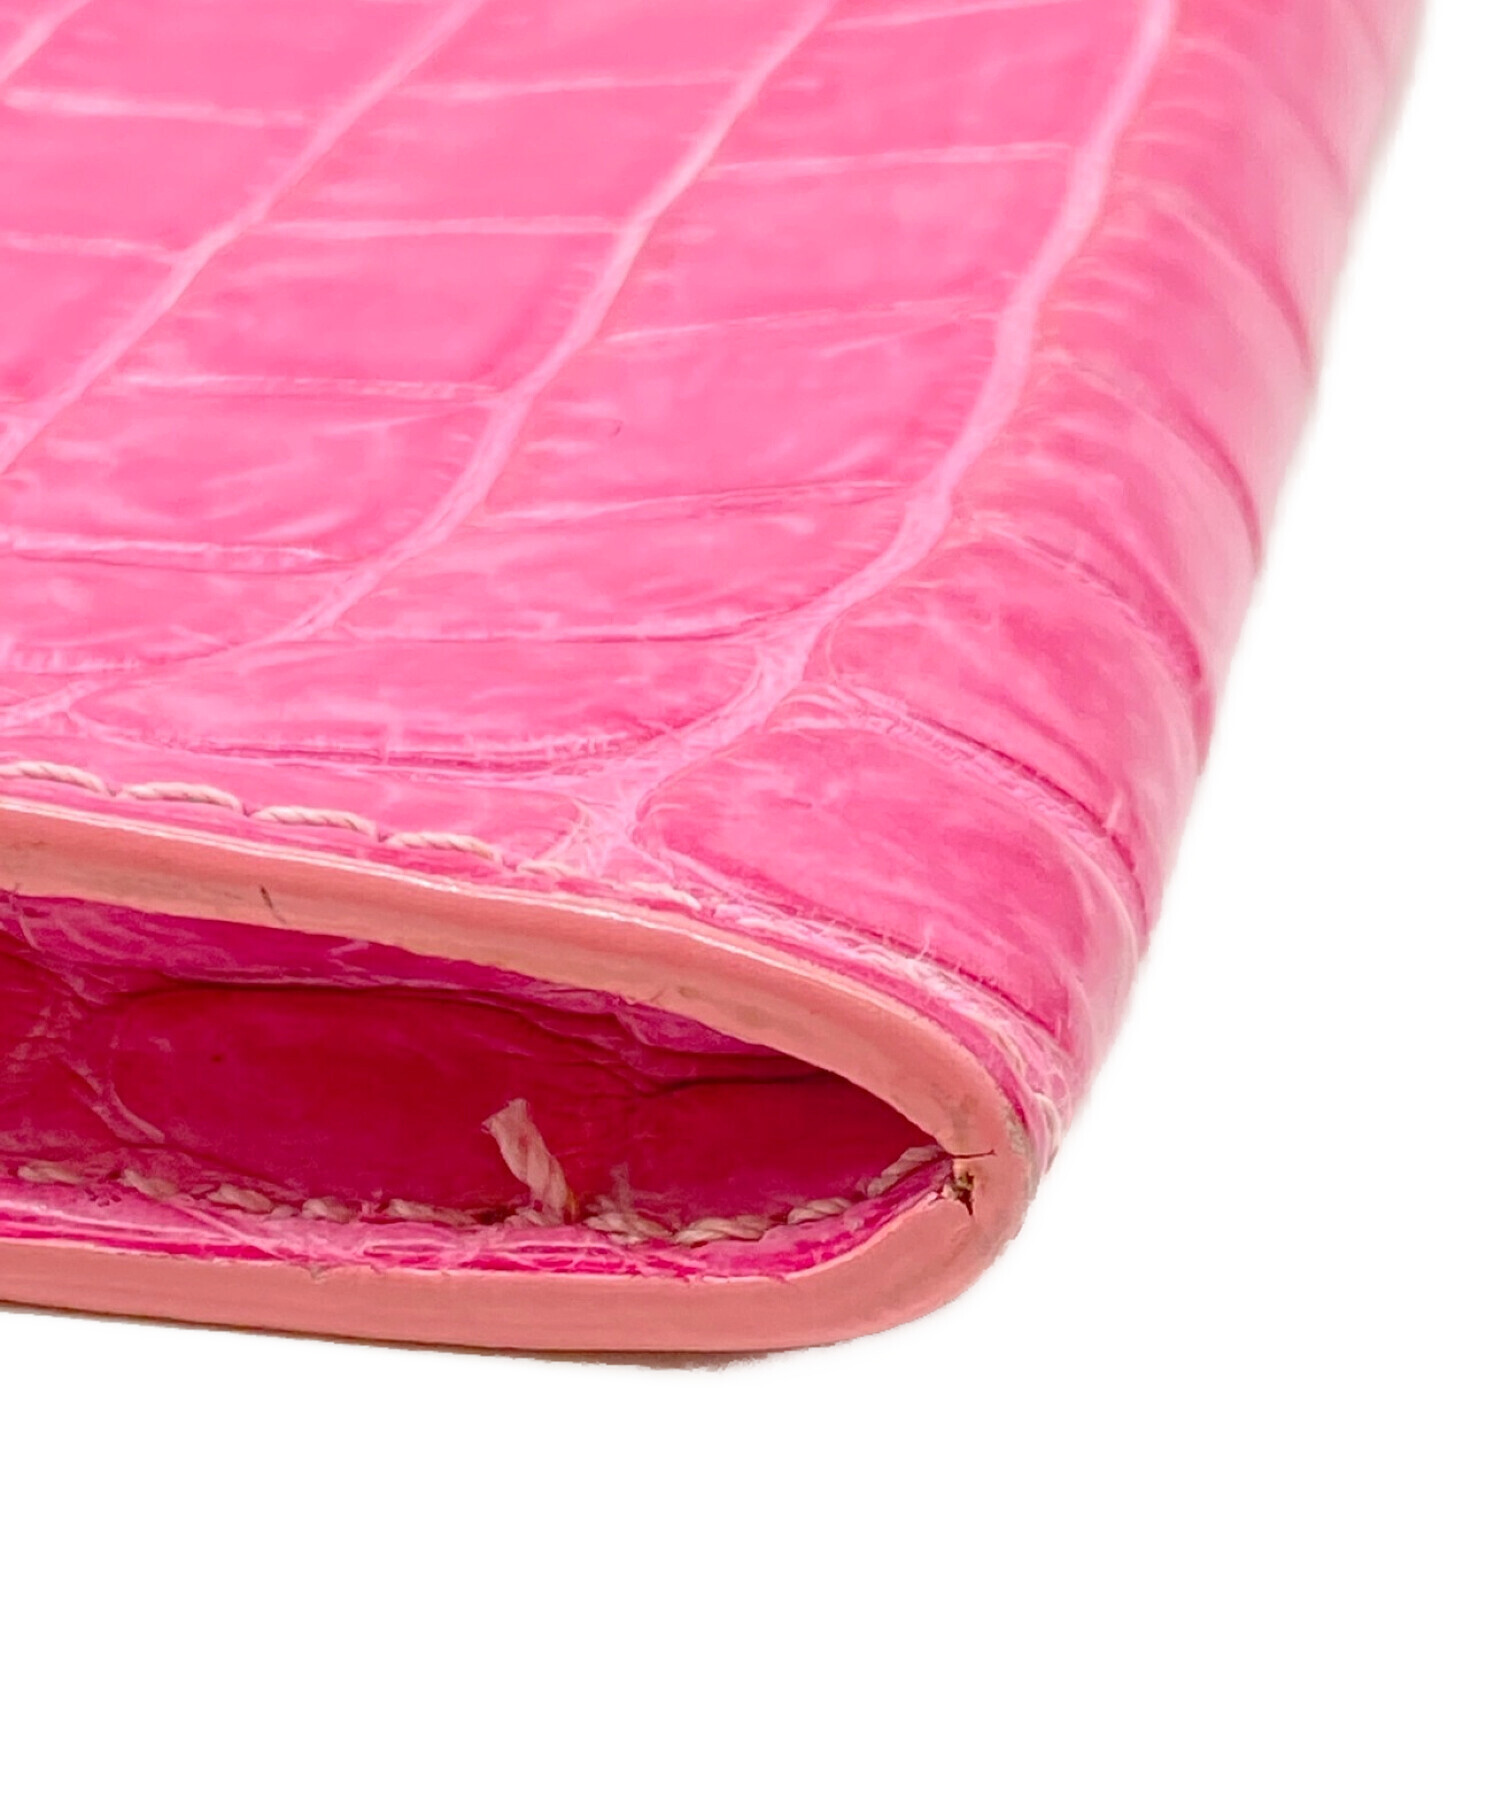 lucien pellat-finet (ルシアン・ペラフィネ) クロコクラッチバッグ ピンク サイズ:-